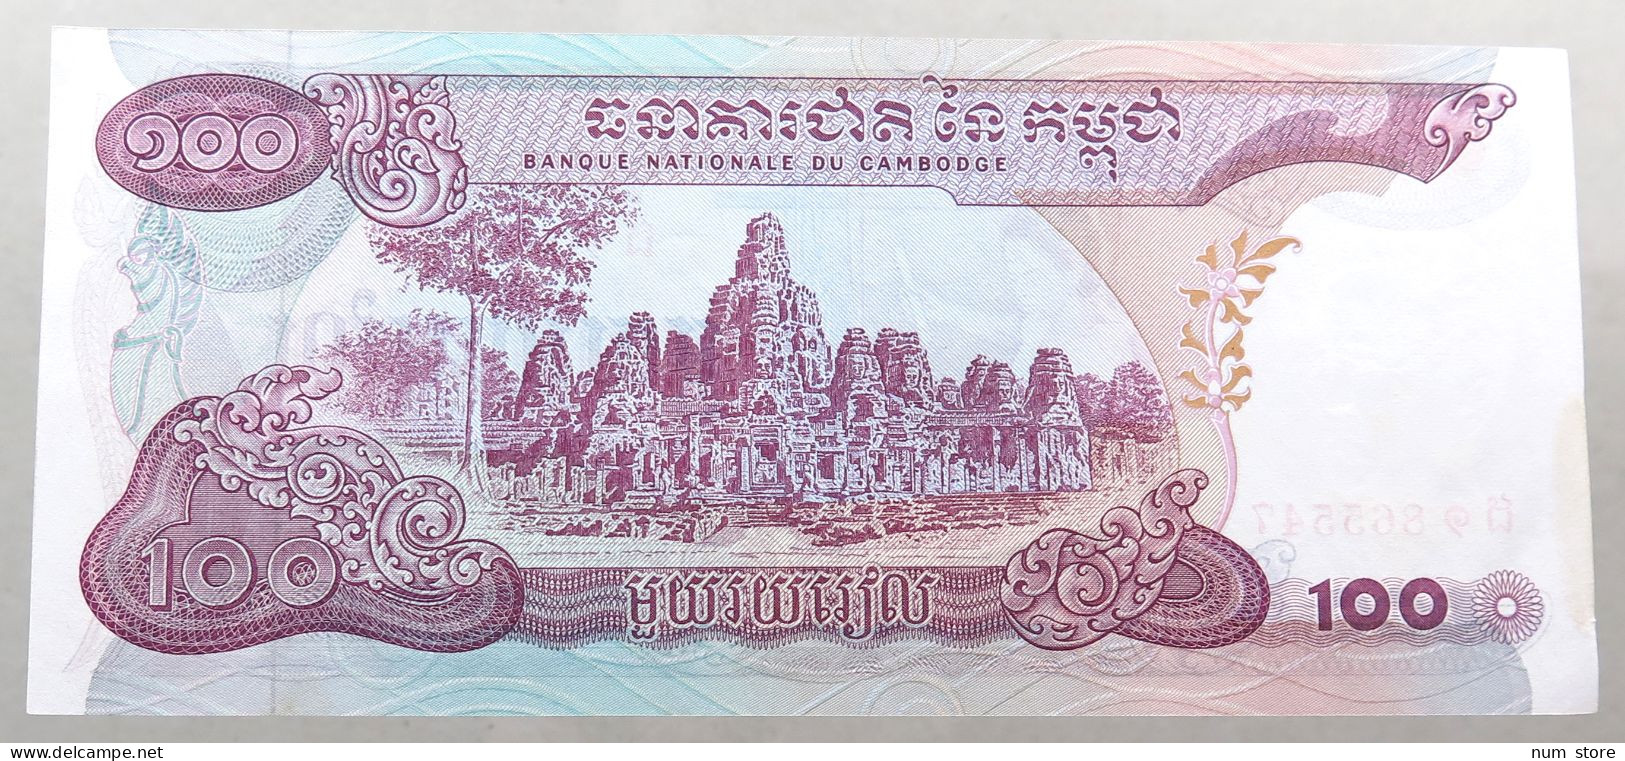 CAMBODIA 100 RIELS TOP #alb051 0813 - Cambodge